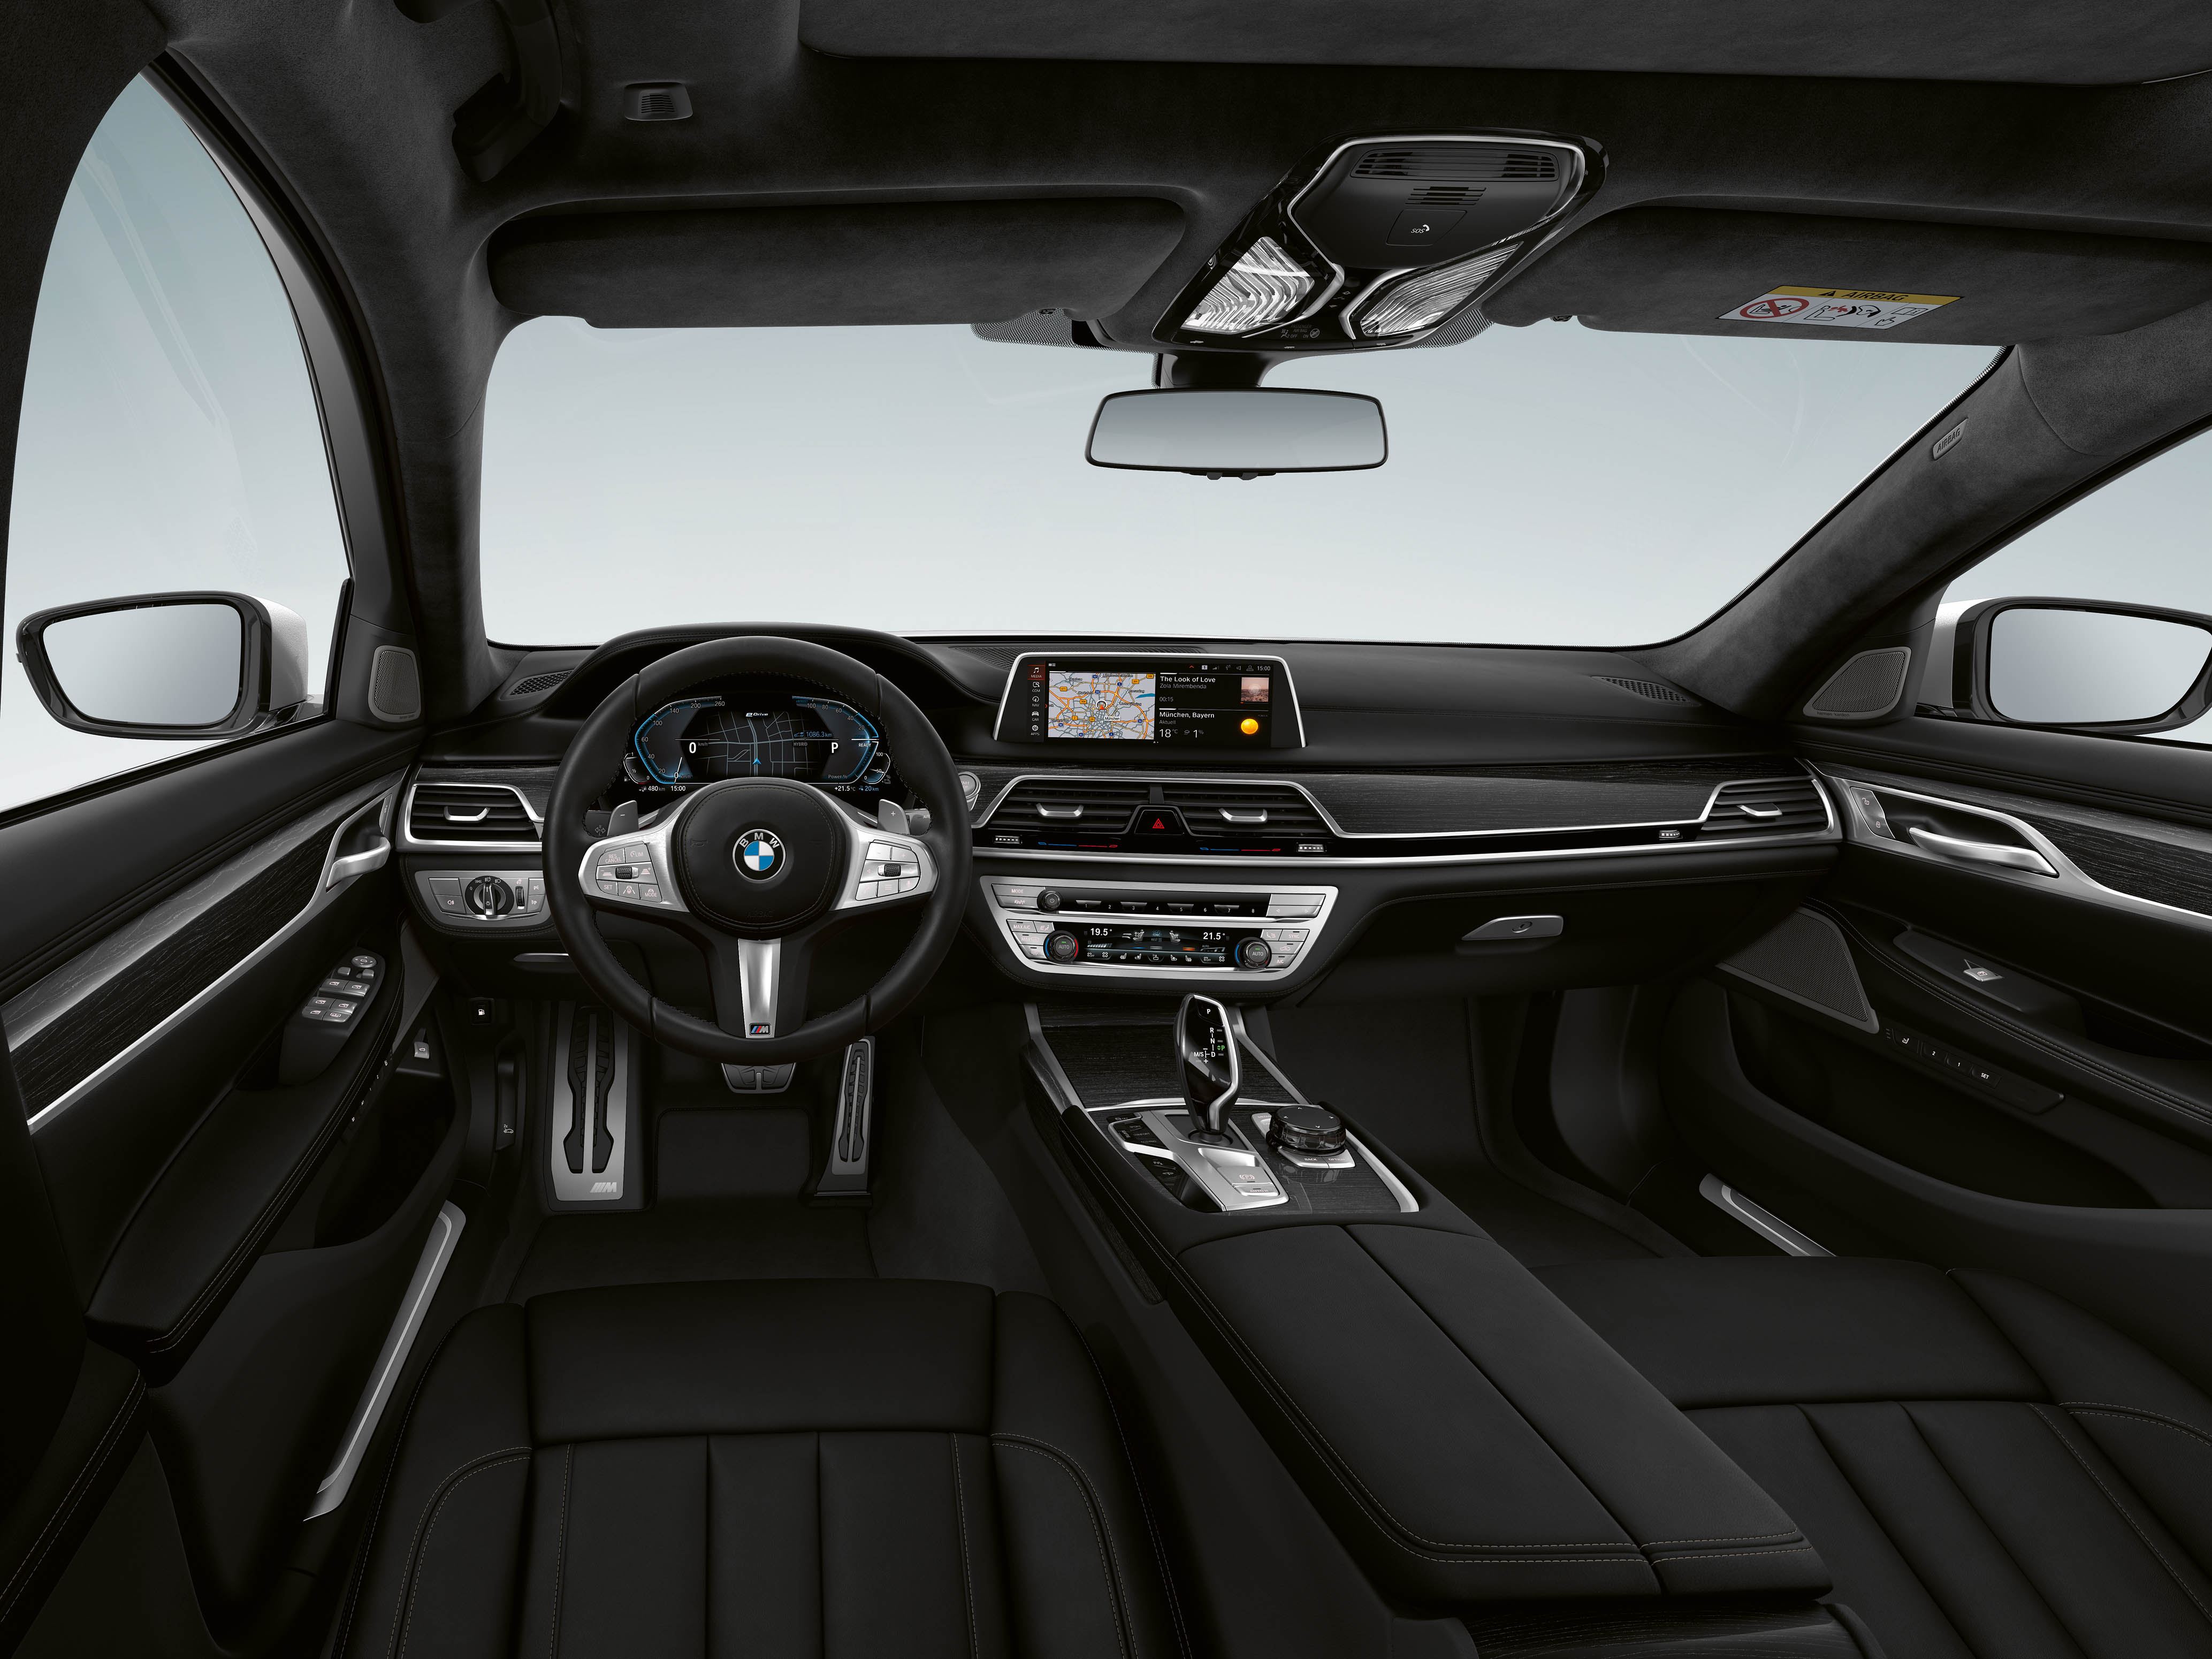 BMW 7 Series iPerformance (G11) exterior model